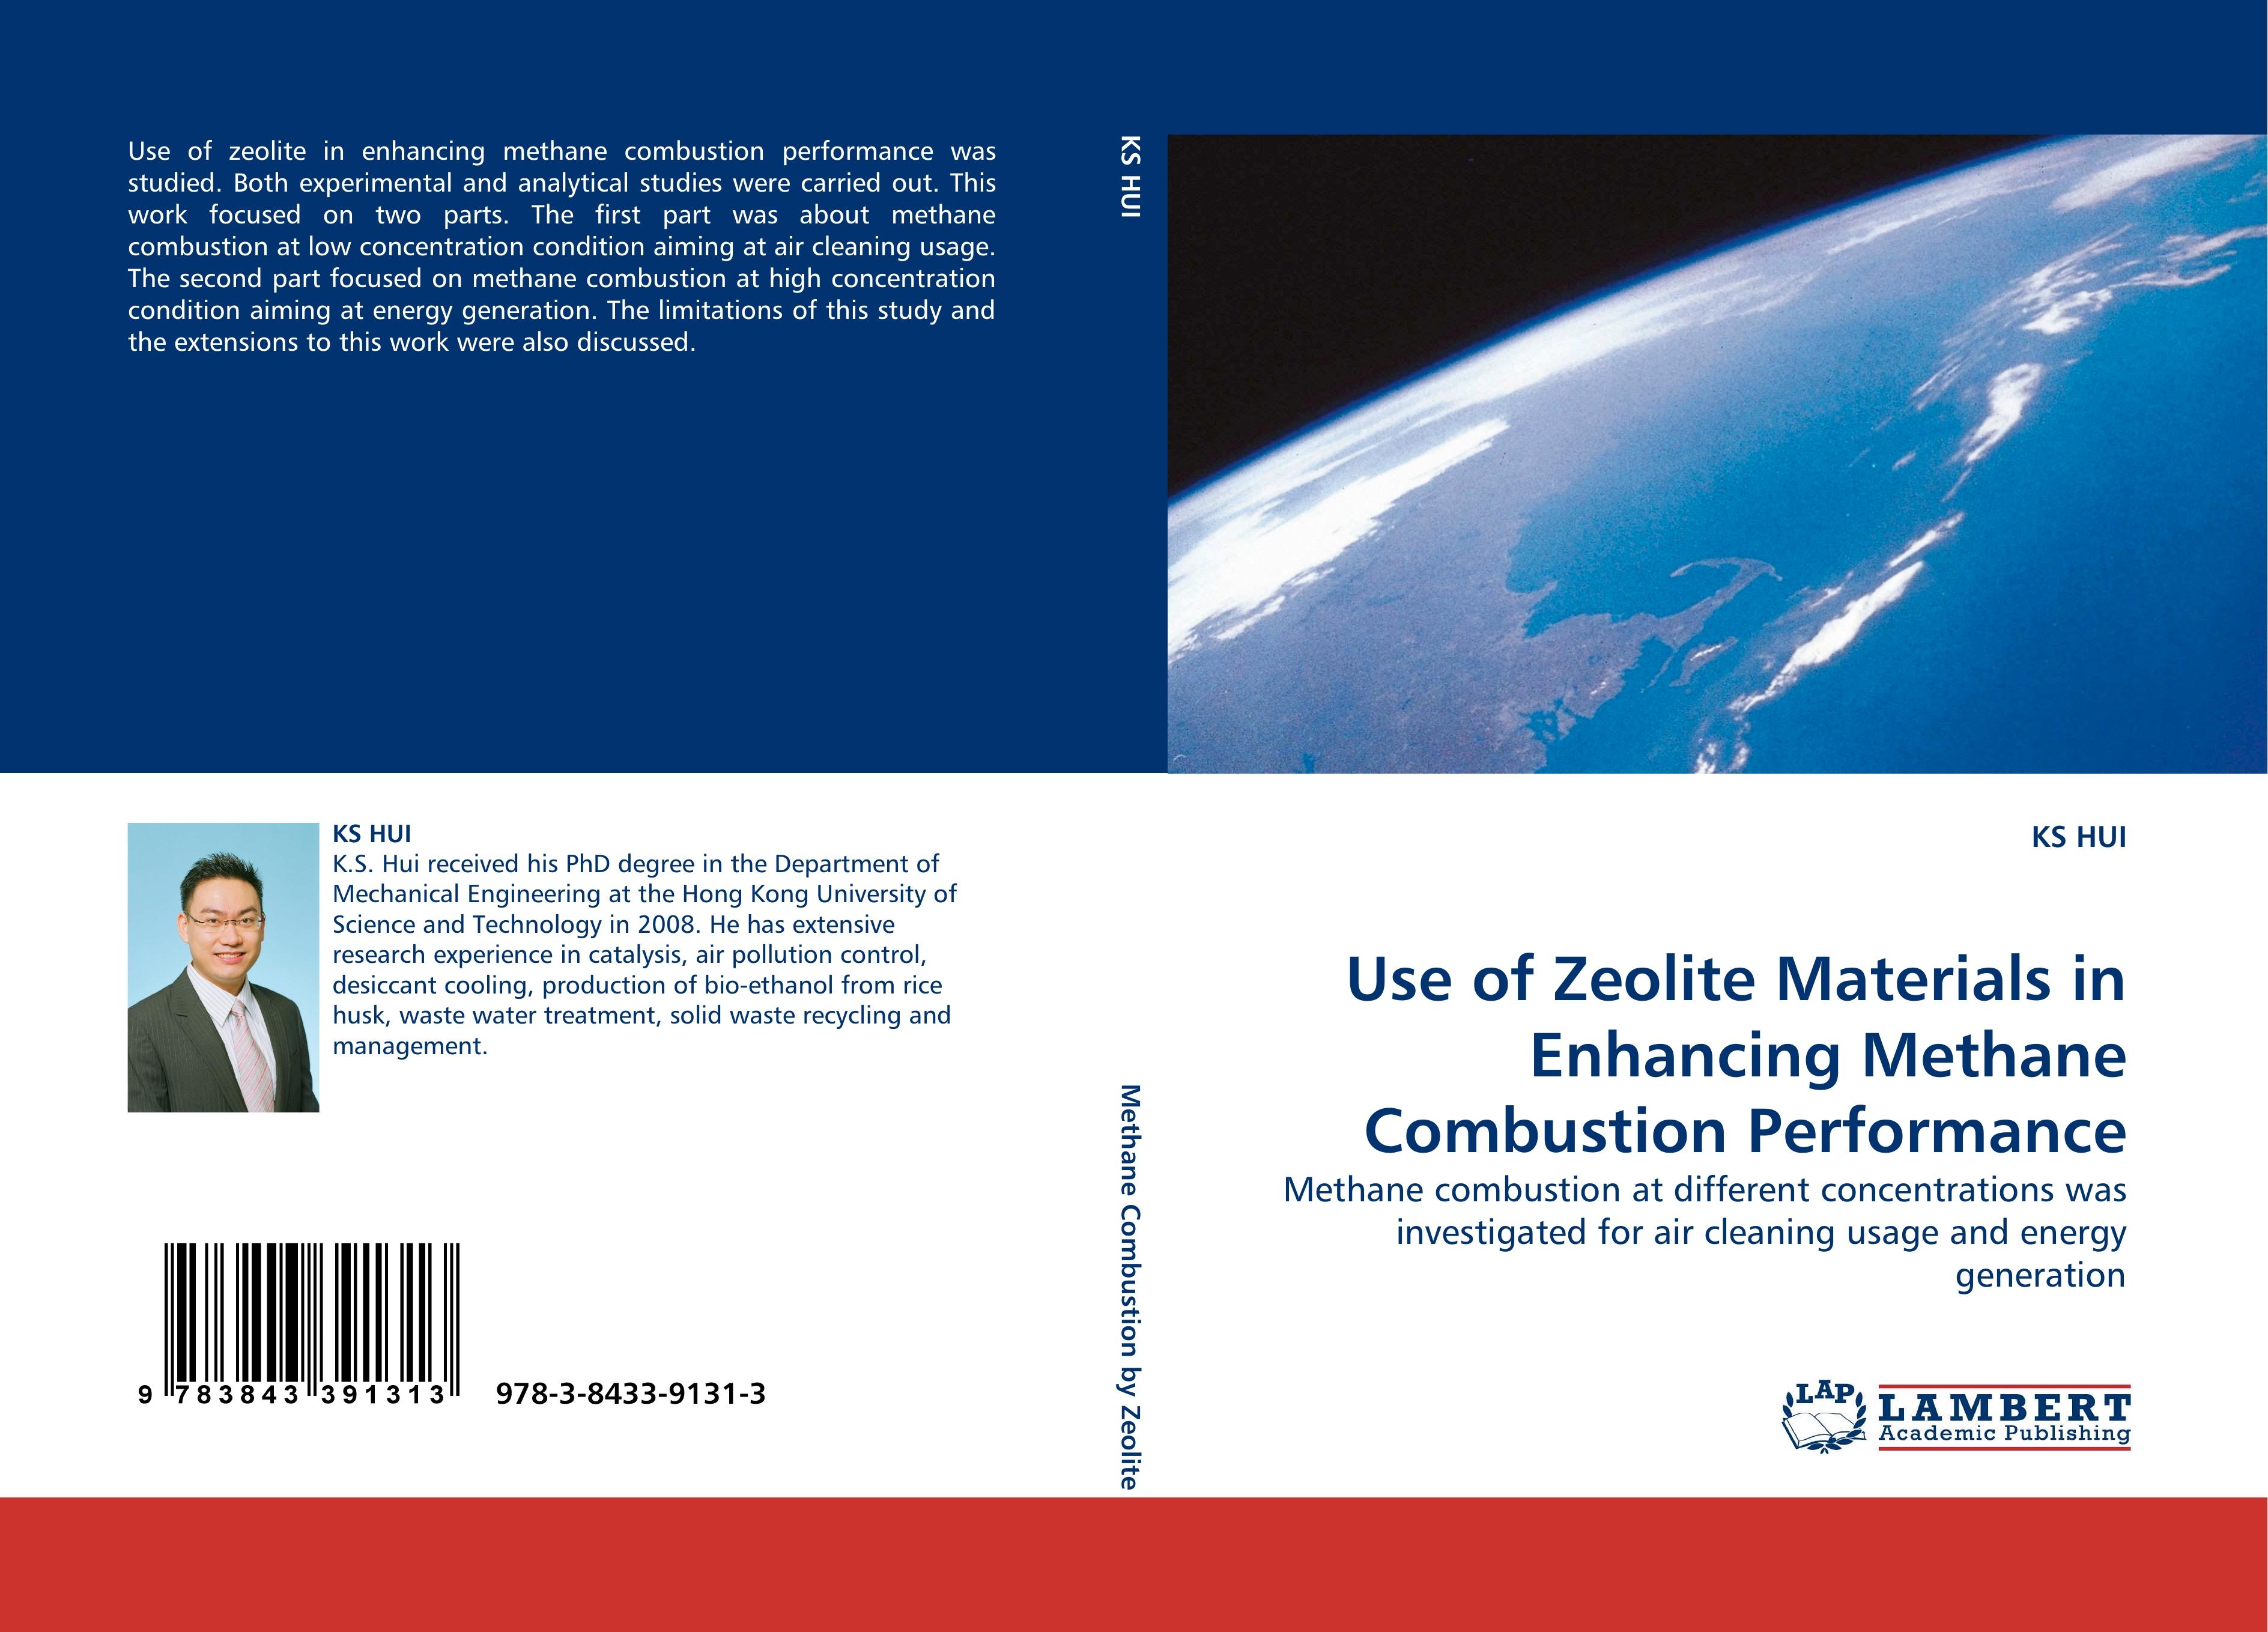 Use of Zeolite Materials in Enhancing Methane Combustion Performance - KS HUI